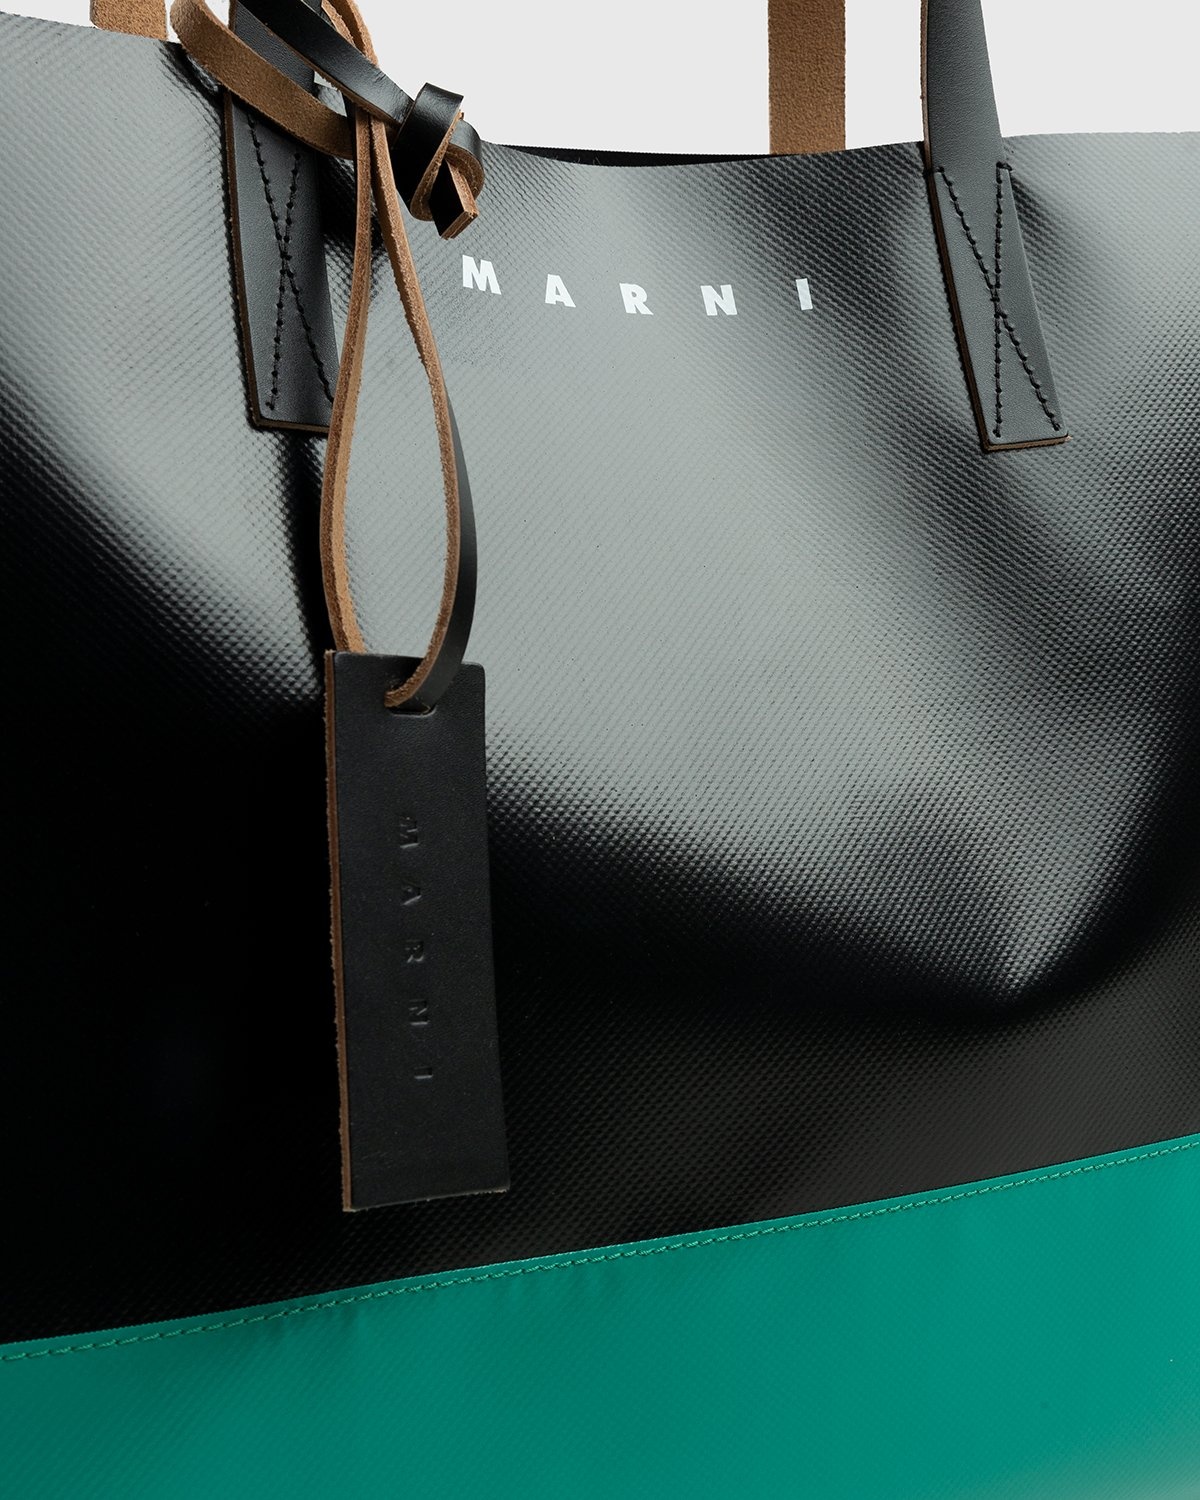 Marni – Tribeca Two-Tone Tote Bag Black/Green - Bags - Black - Image 6